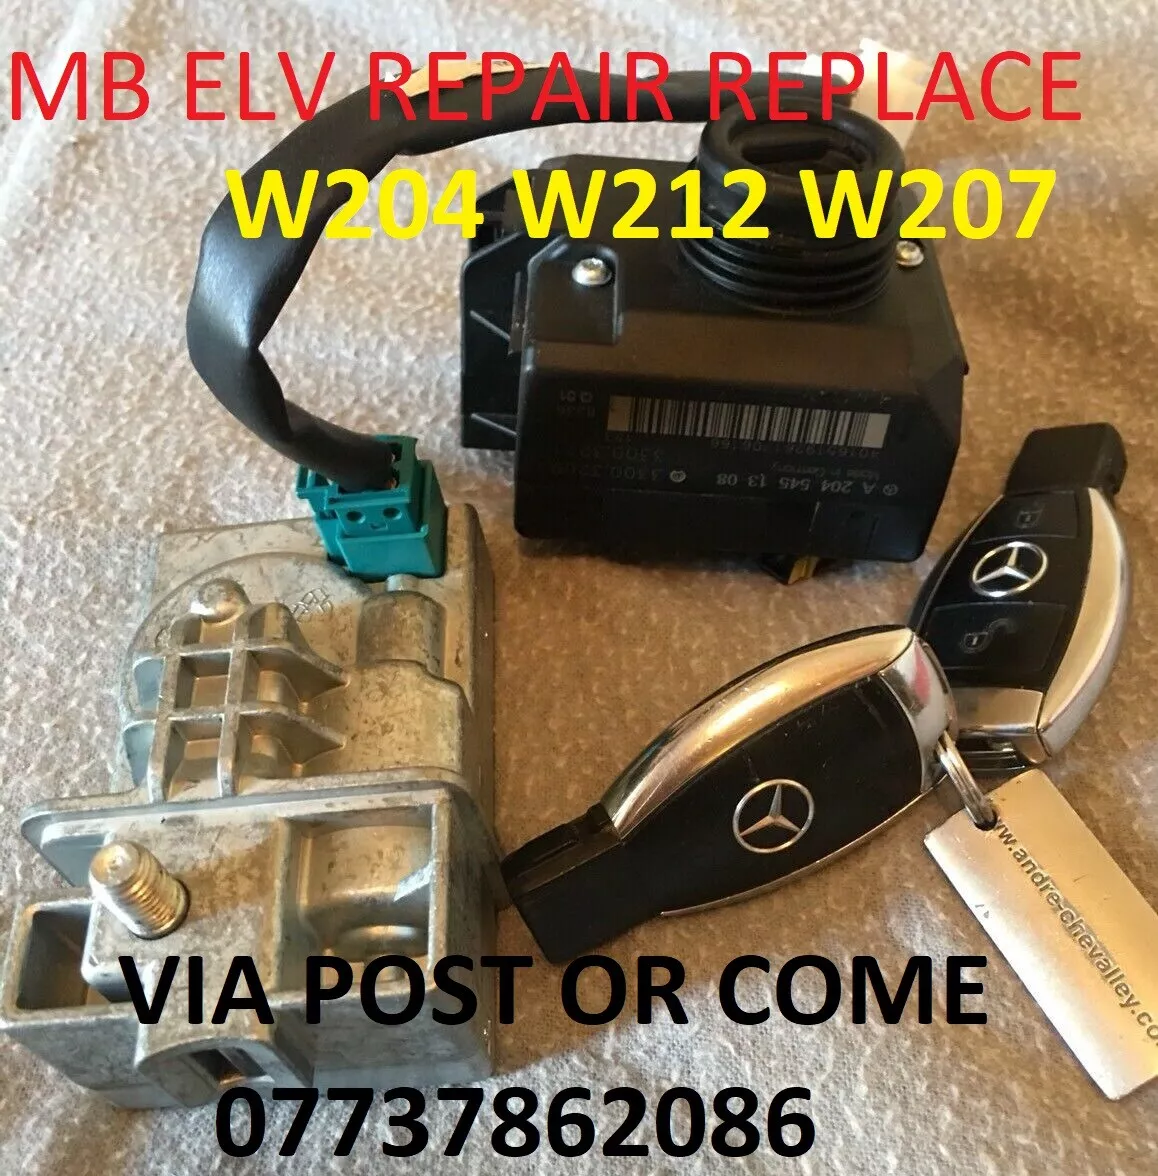 Mercedes Benz ESL/ELV W204 W212 W207 electronic steering lock repair  service